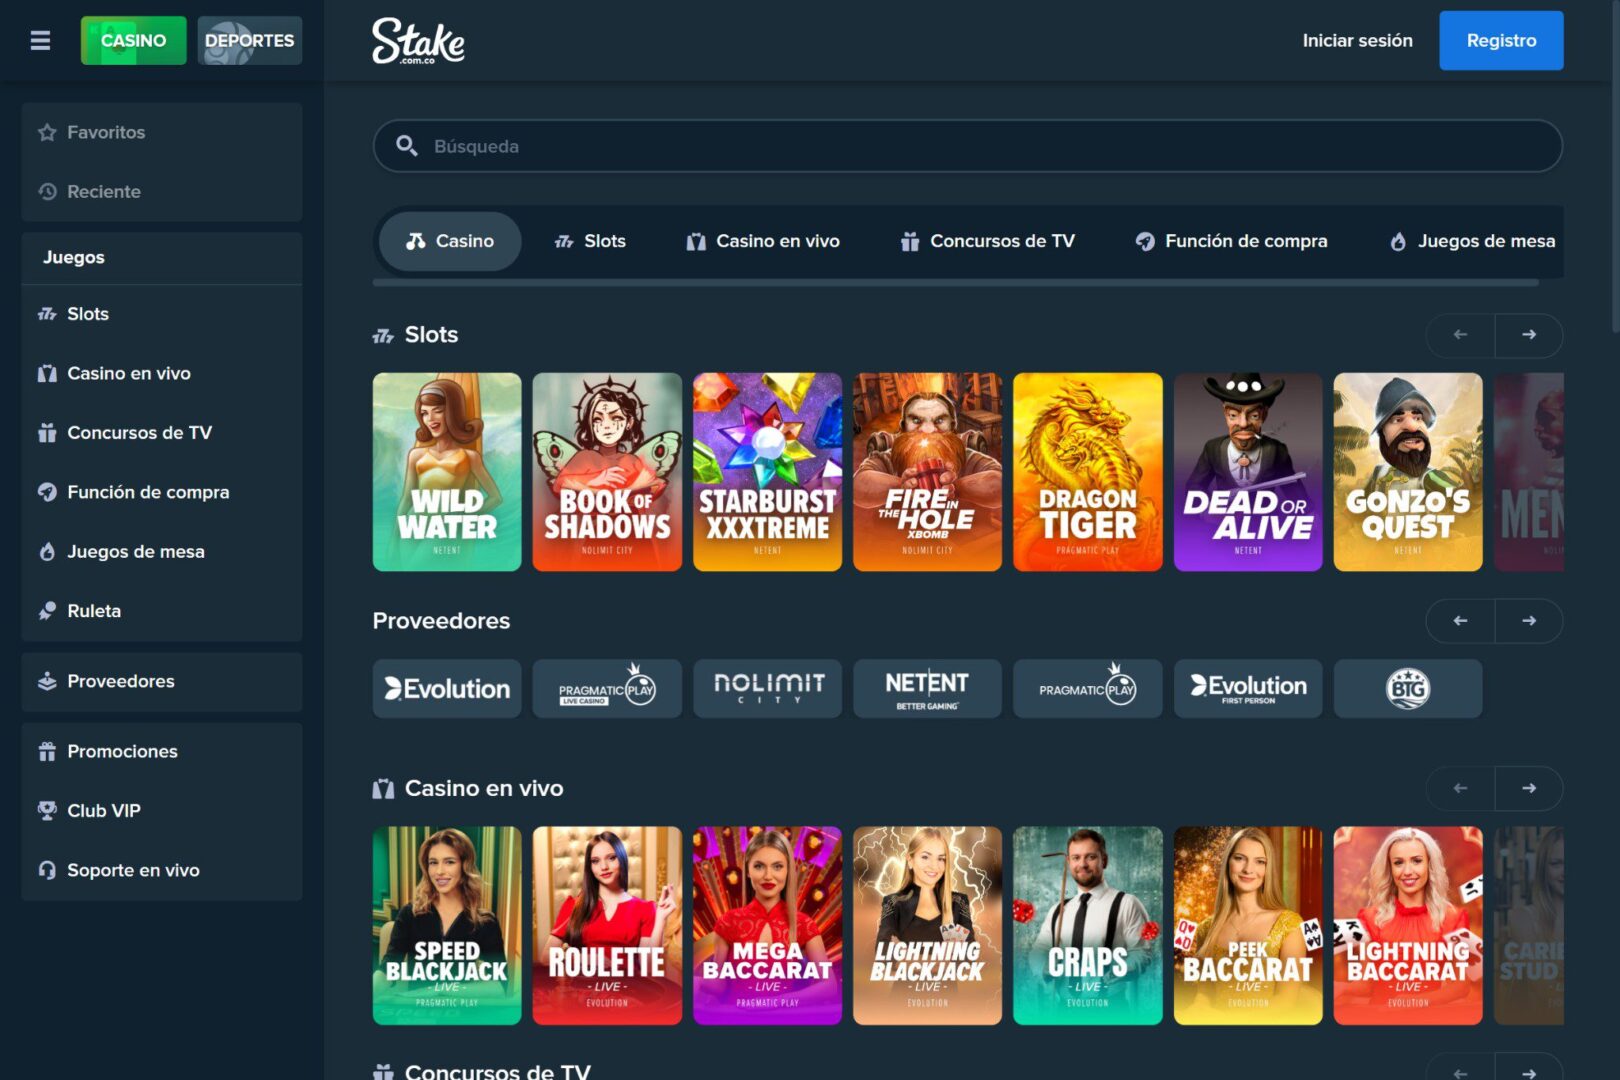 screenshot of Stake.com casino lobby